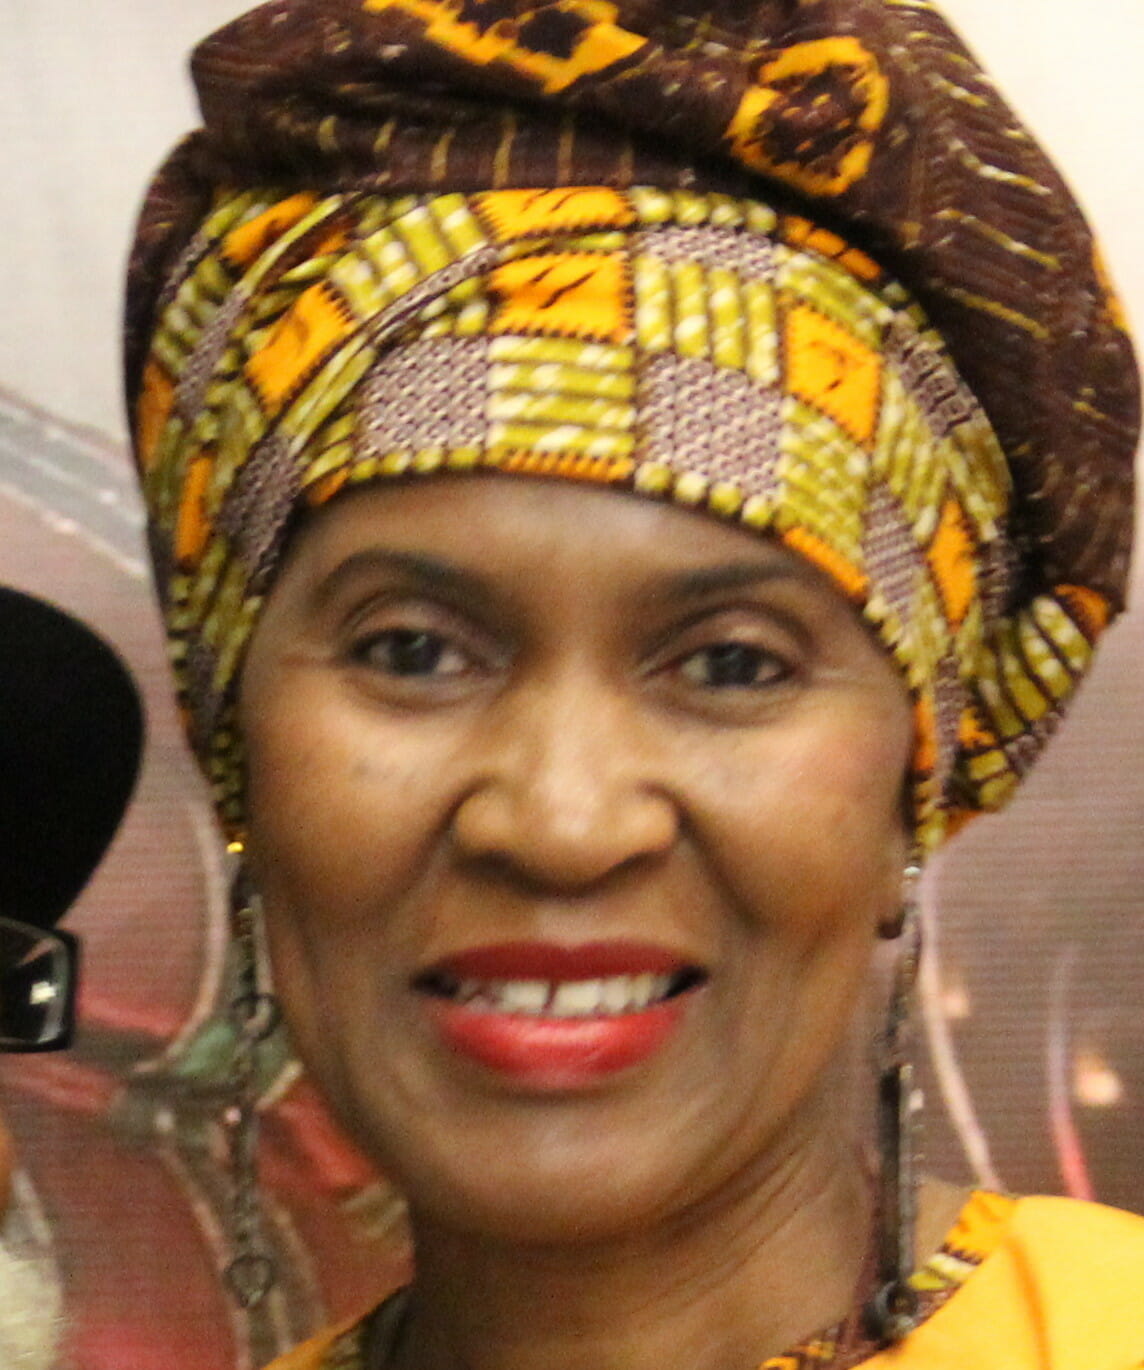 Ashro Woman of the Week, Wajeedah, a smiling African-American woman wearing a yellow print headwrap.